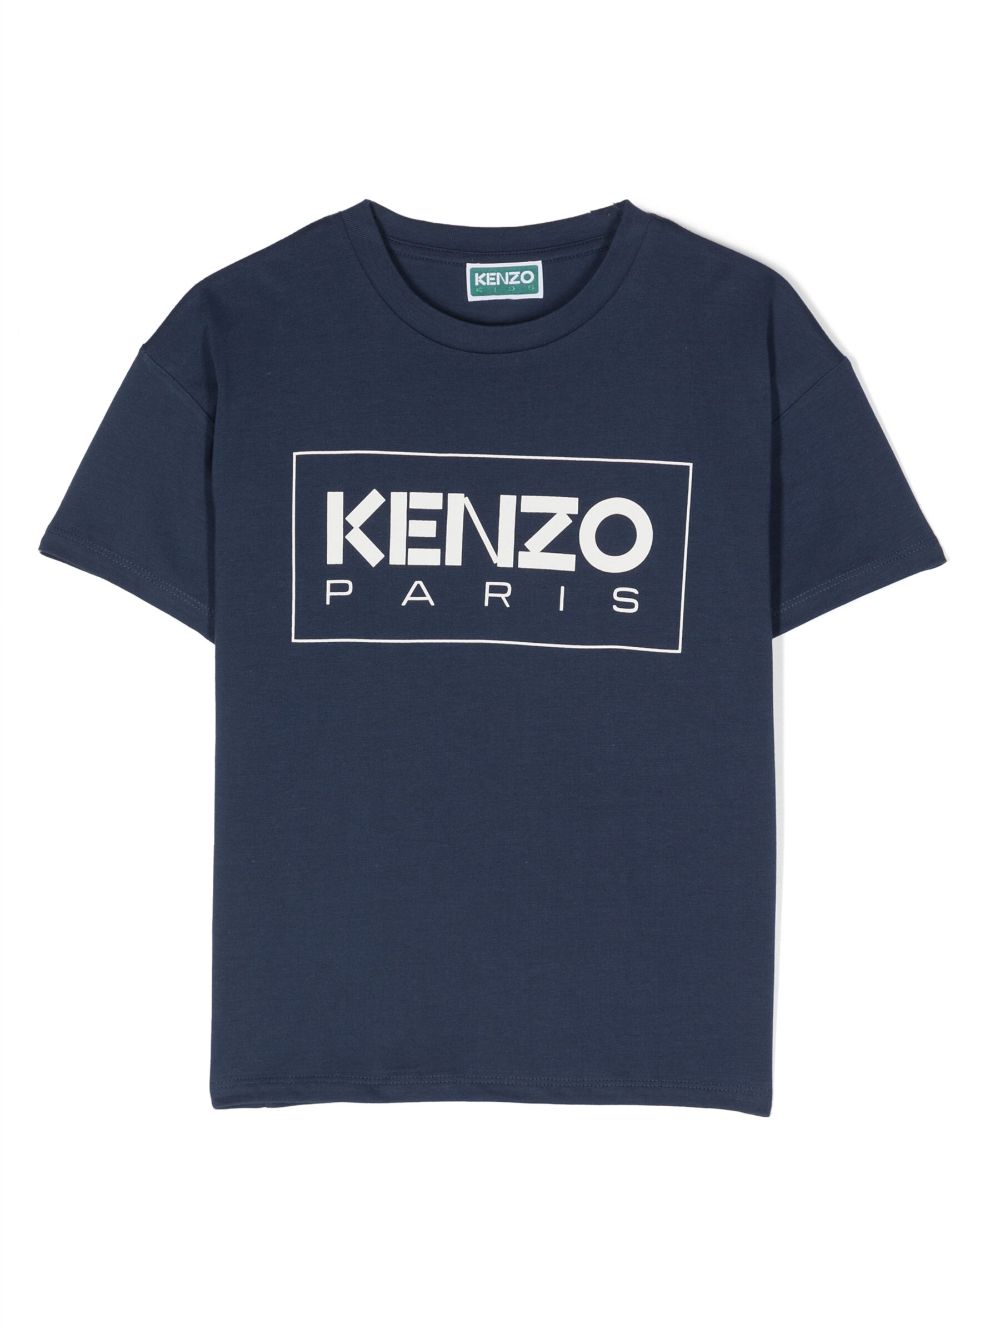 Blue cotton jersey boy KENZO t-shirt